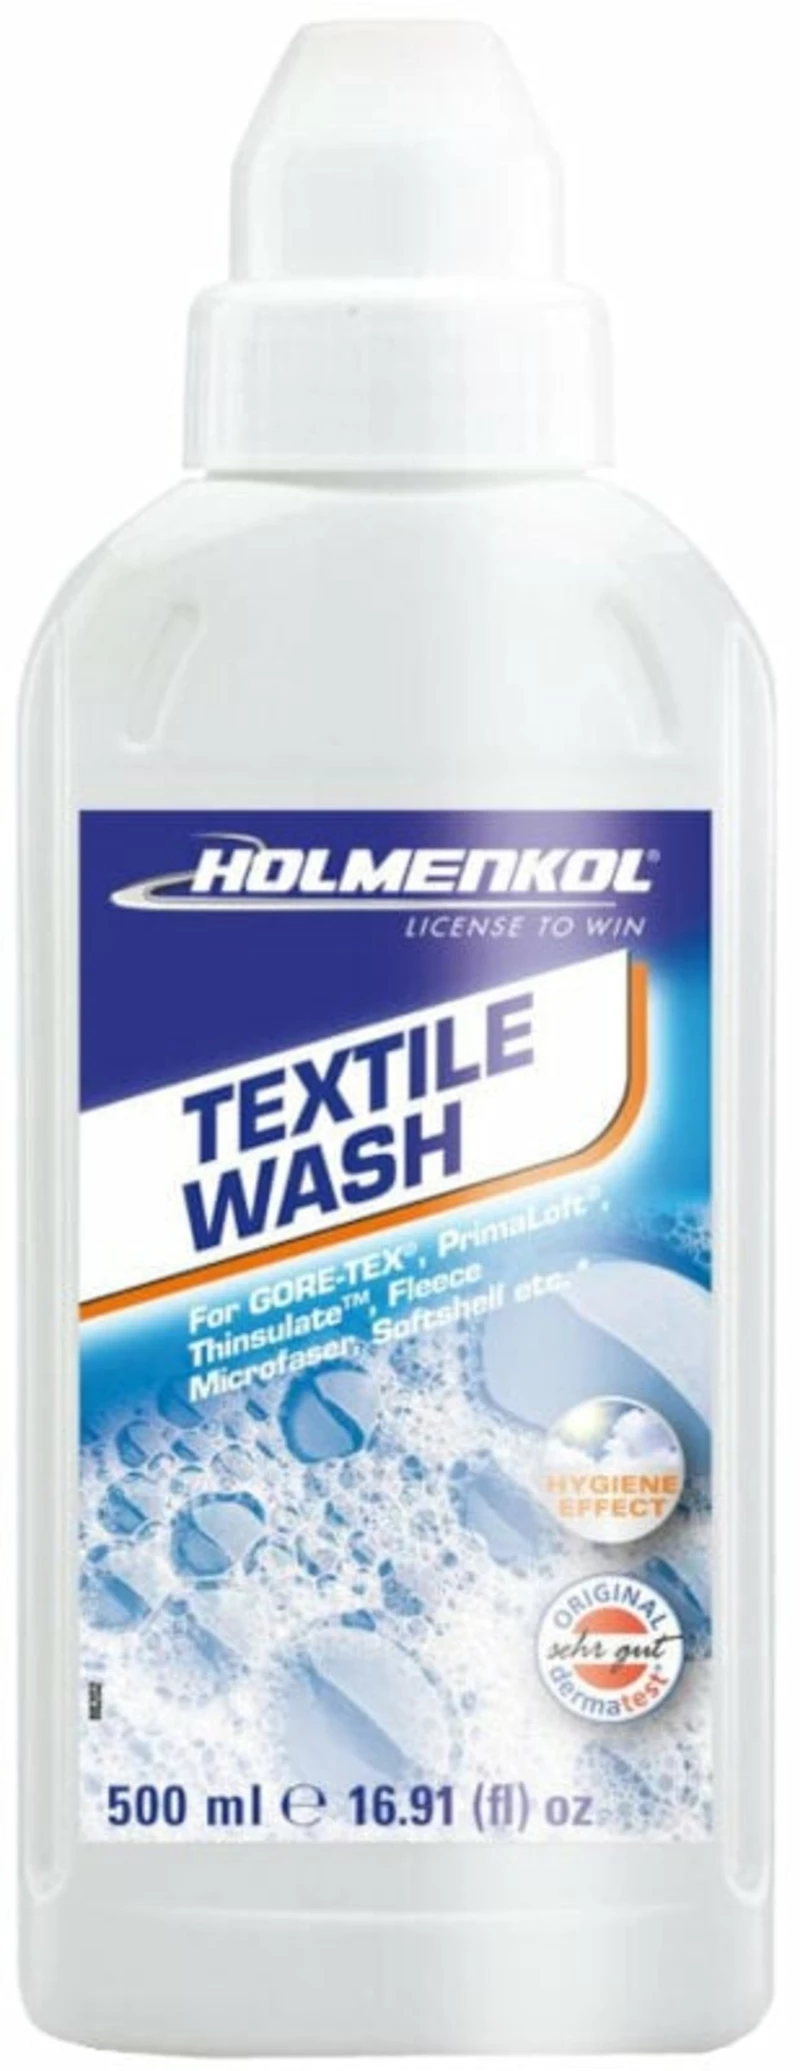 Holmenkol Textile Wash 500 ml Prací prostředek